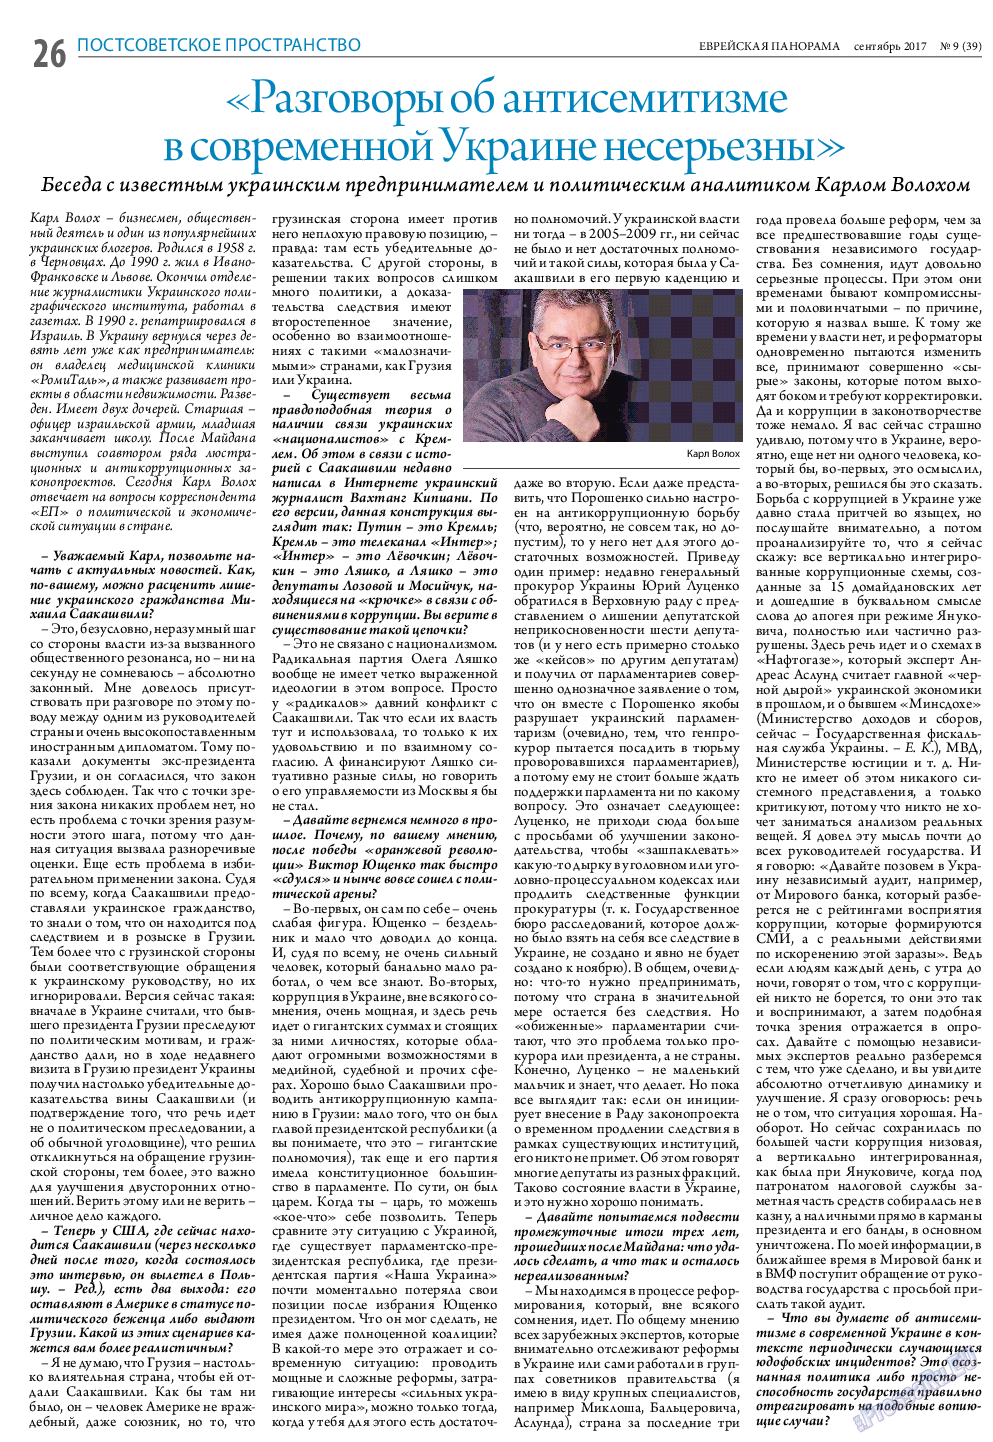 Еврейская панорама, газета. 2017 №9 стр.26